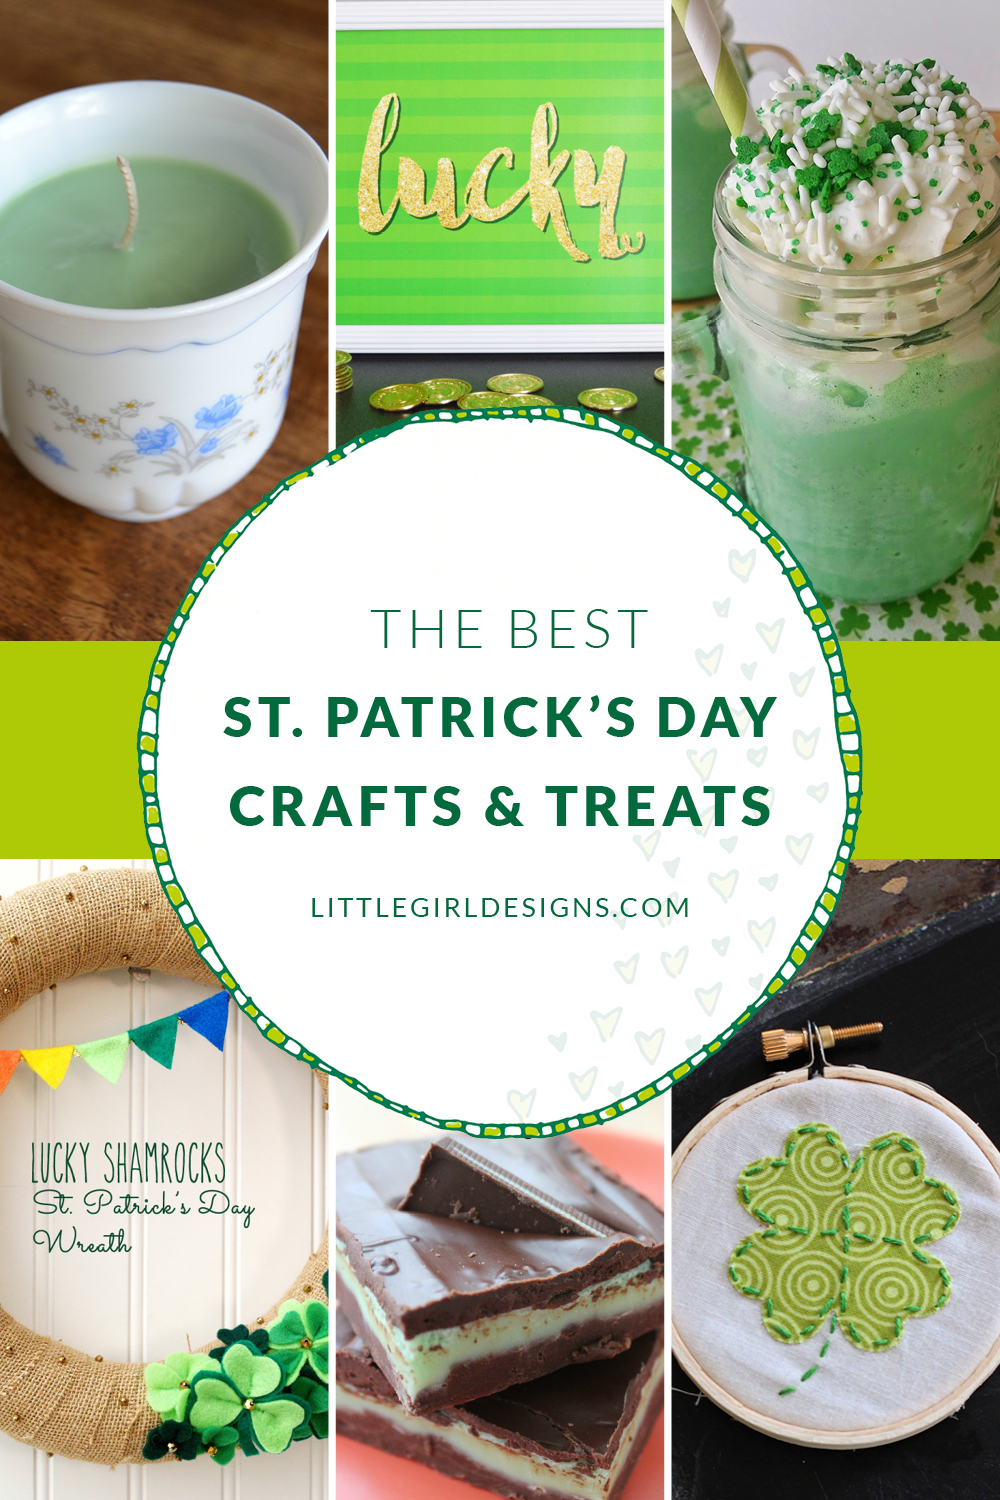 The Best St Patrick's Day Crafts And Treats (Plus a Free Printable!) @littlegirldesigns.com. #stpatricksdaycrafts #stpatricksdaydesserts